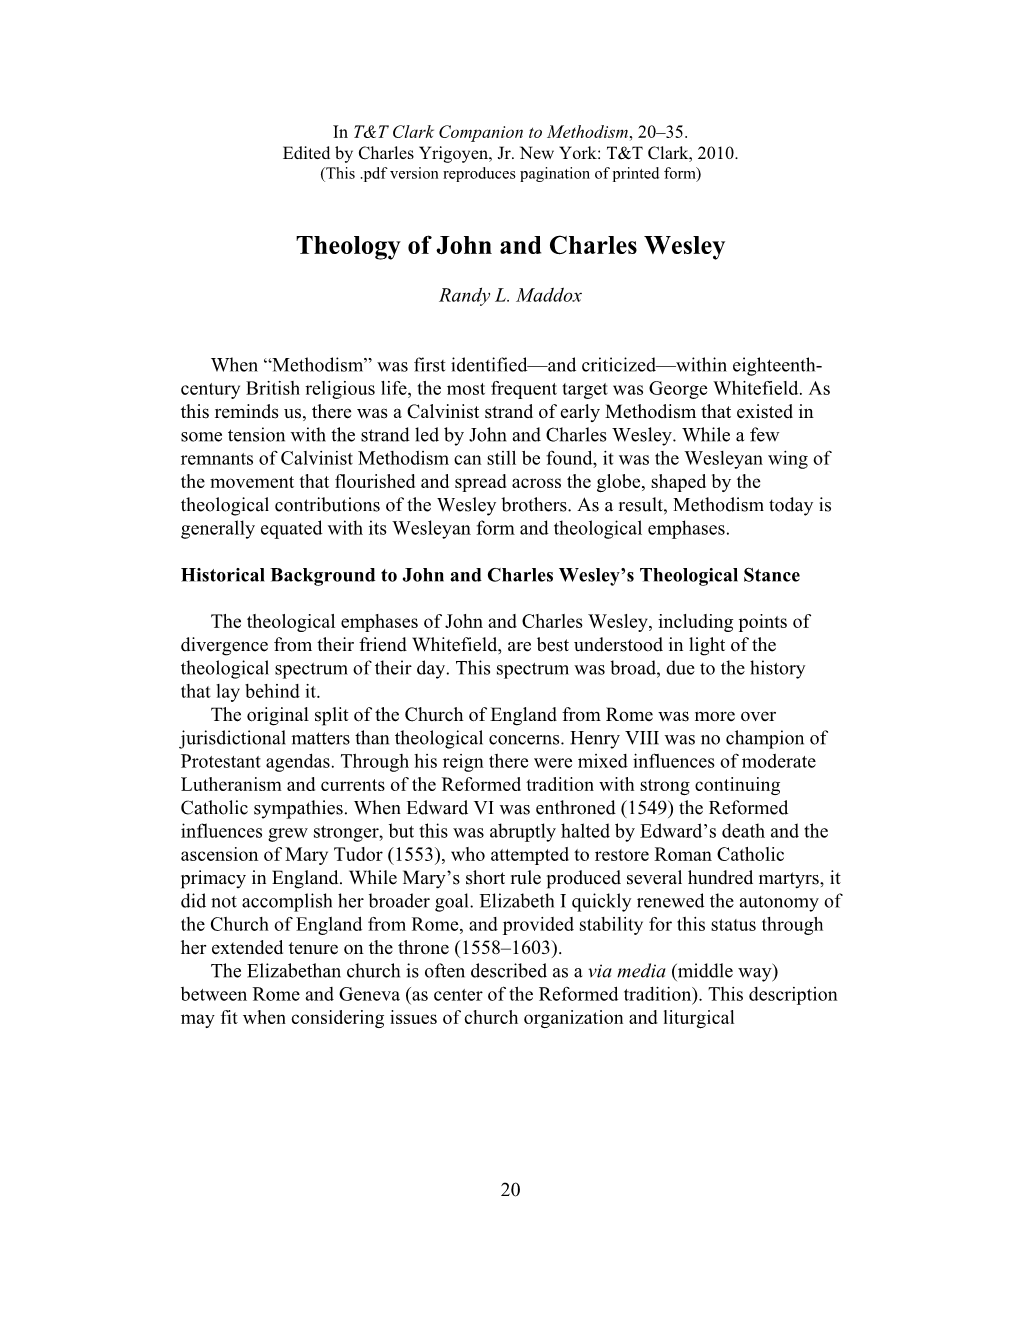 Theology of John and Charles Wesley